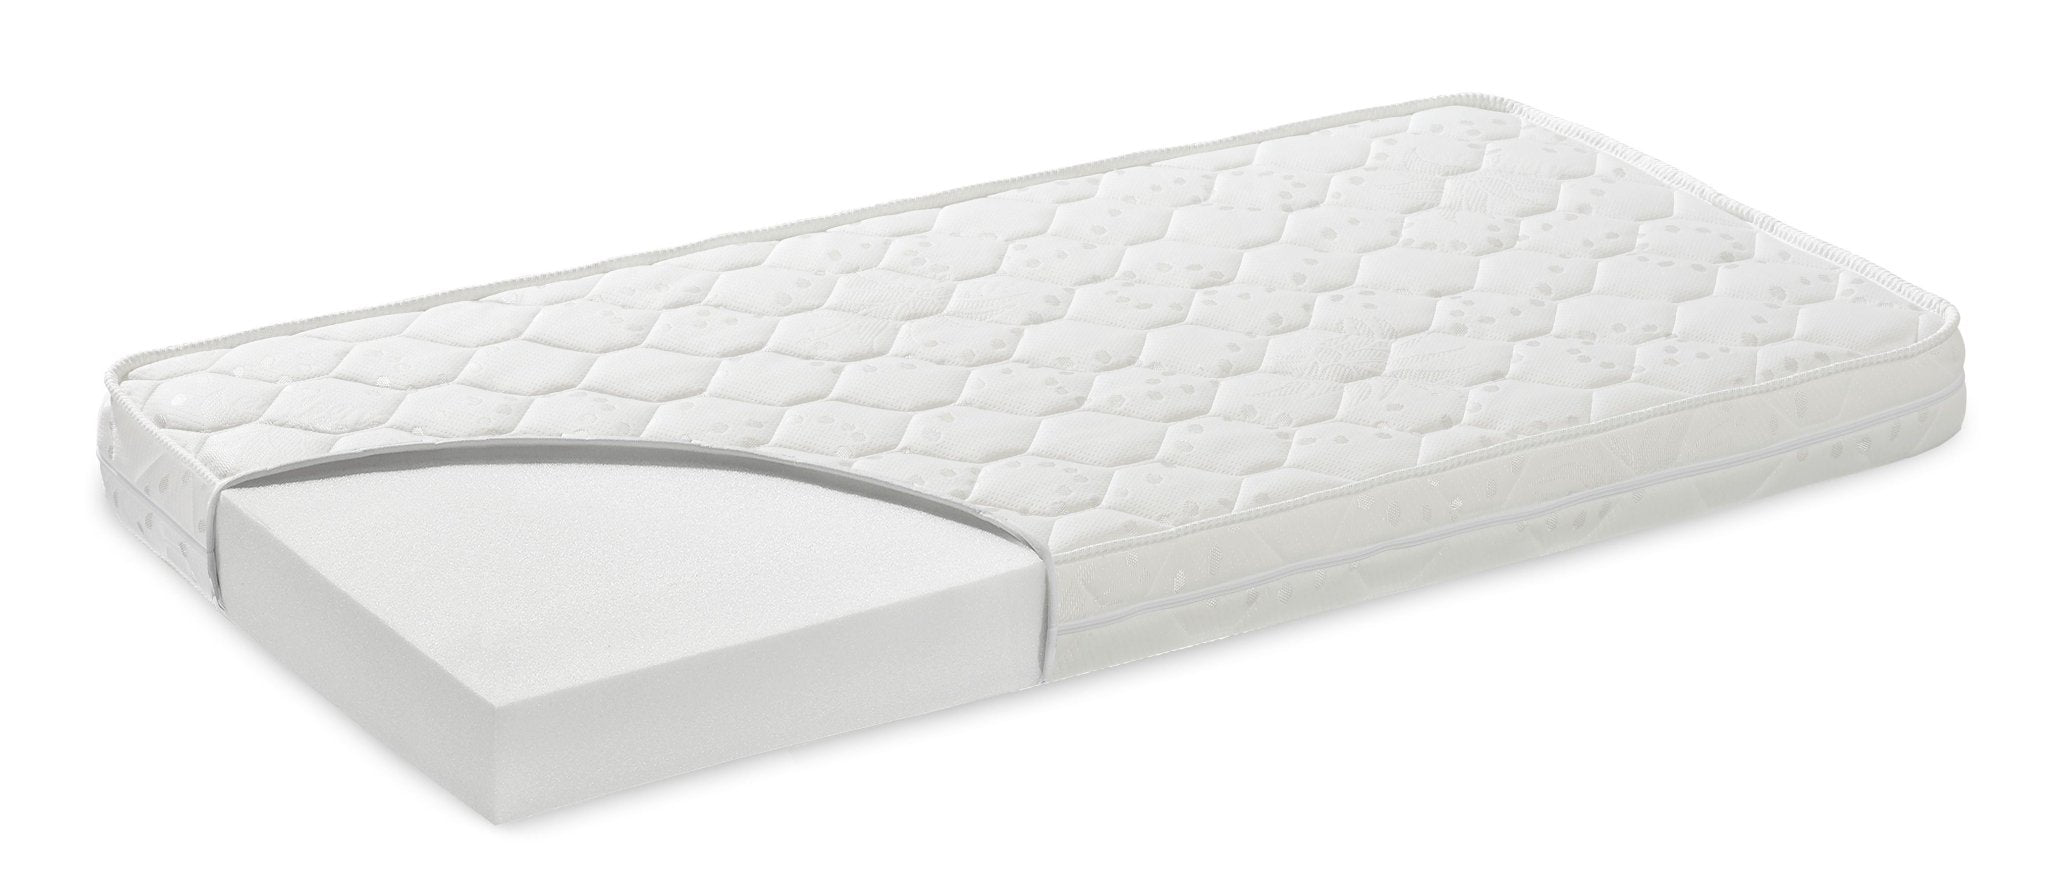 Prestige mattress 140x70 cm - Scandinavian Stories by Marton